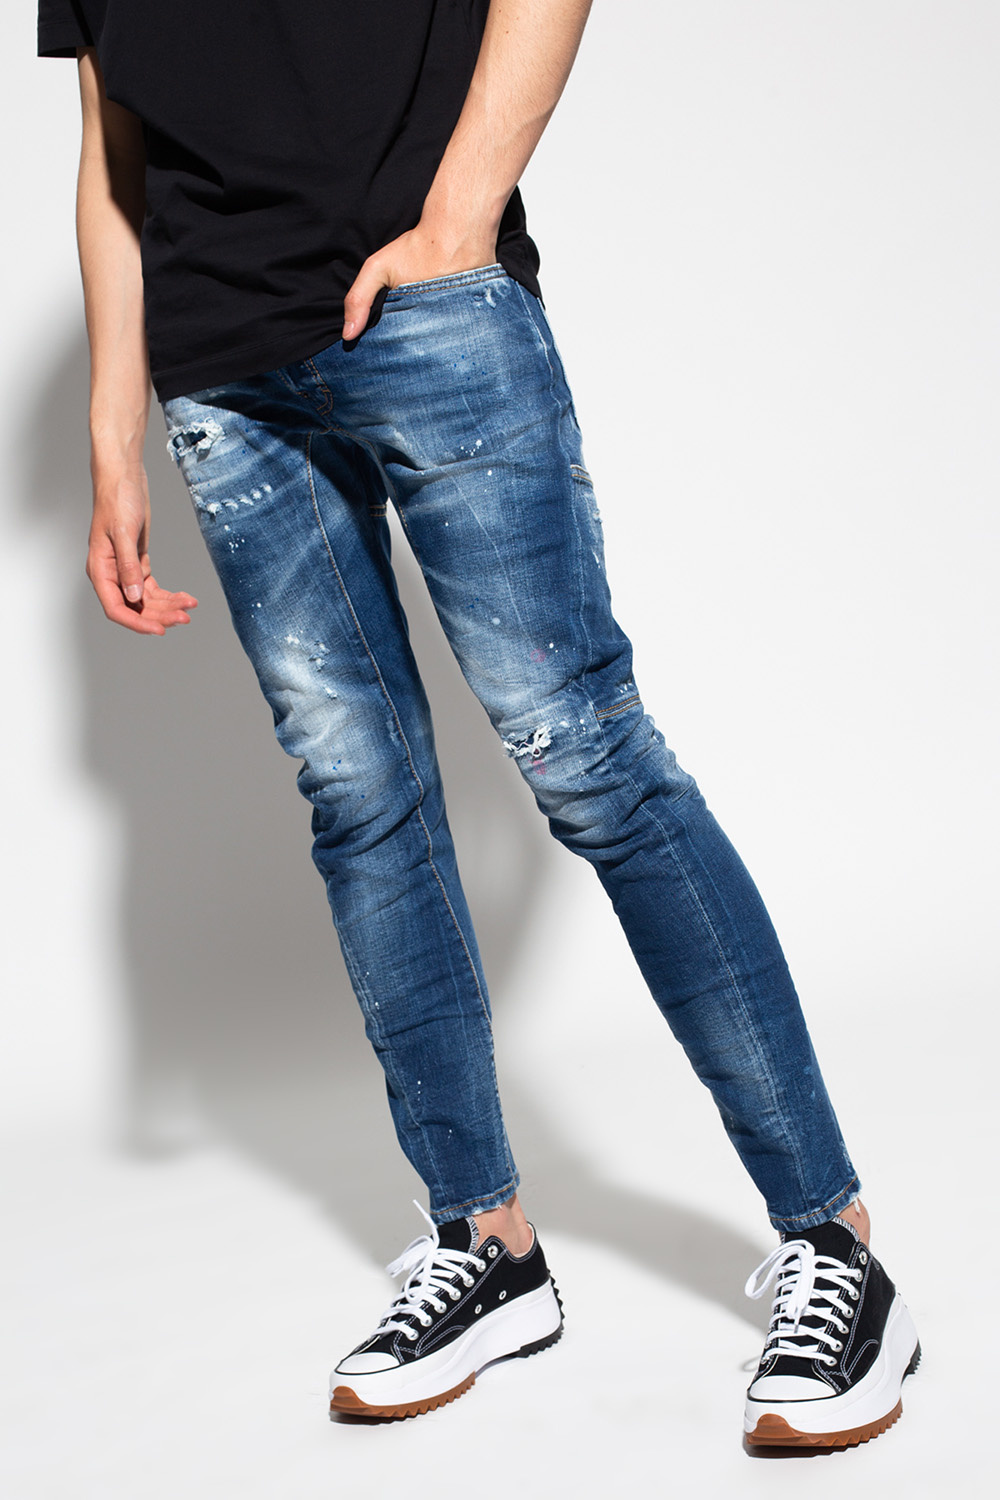 Dsquared2 'Tidy Biker' jeans | Men's Clothing | PochtaShops